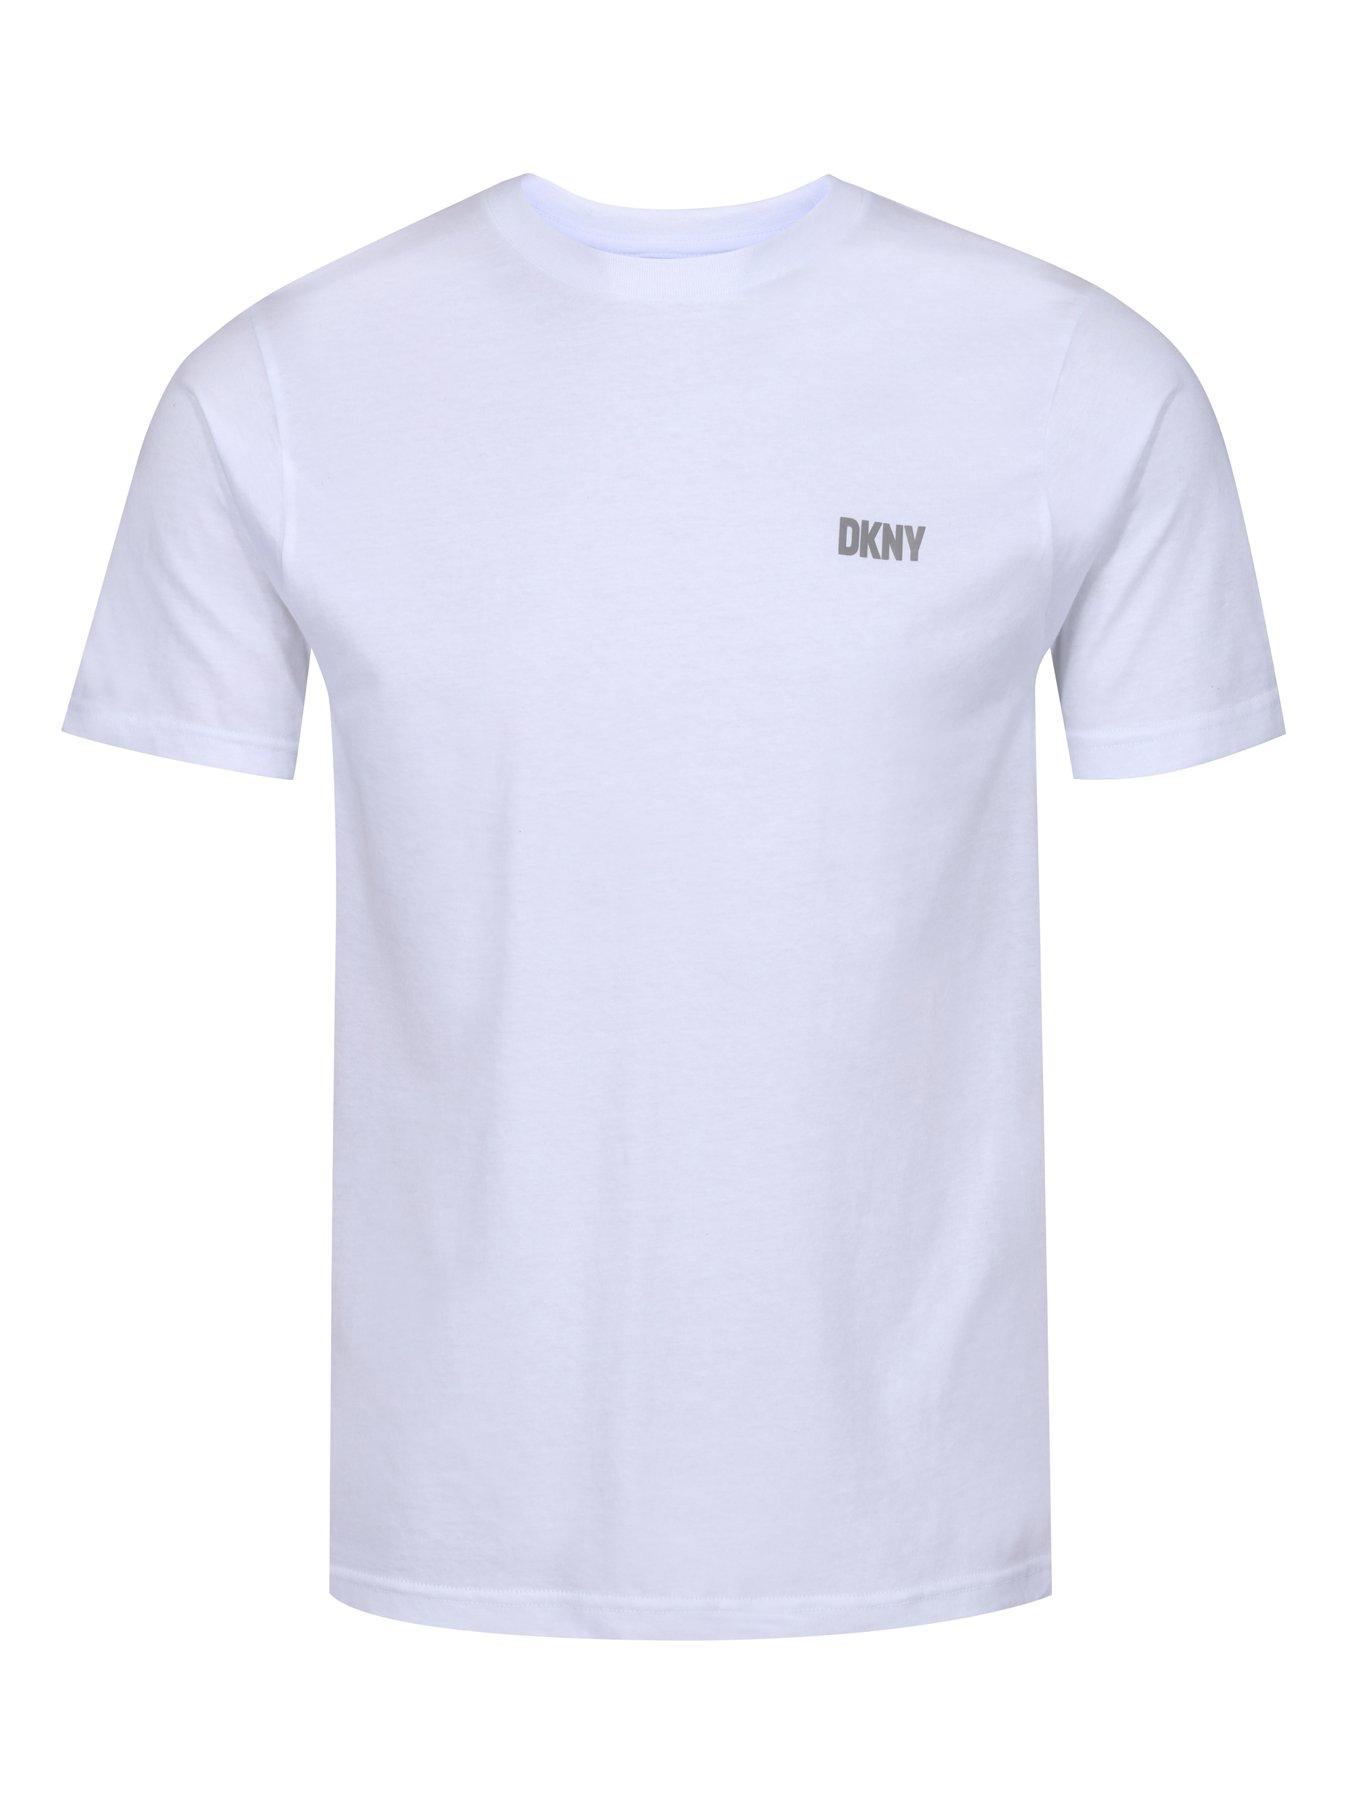 Giants Pack 3 DKNY T-shirt Multi -